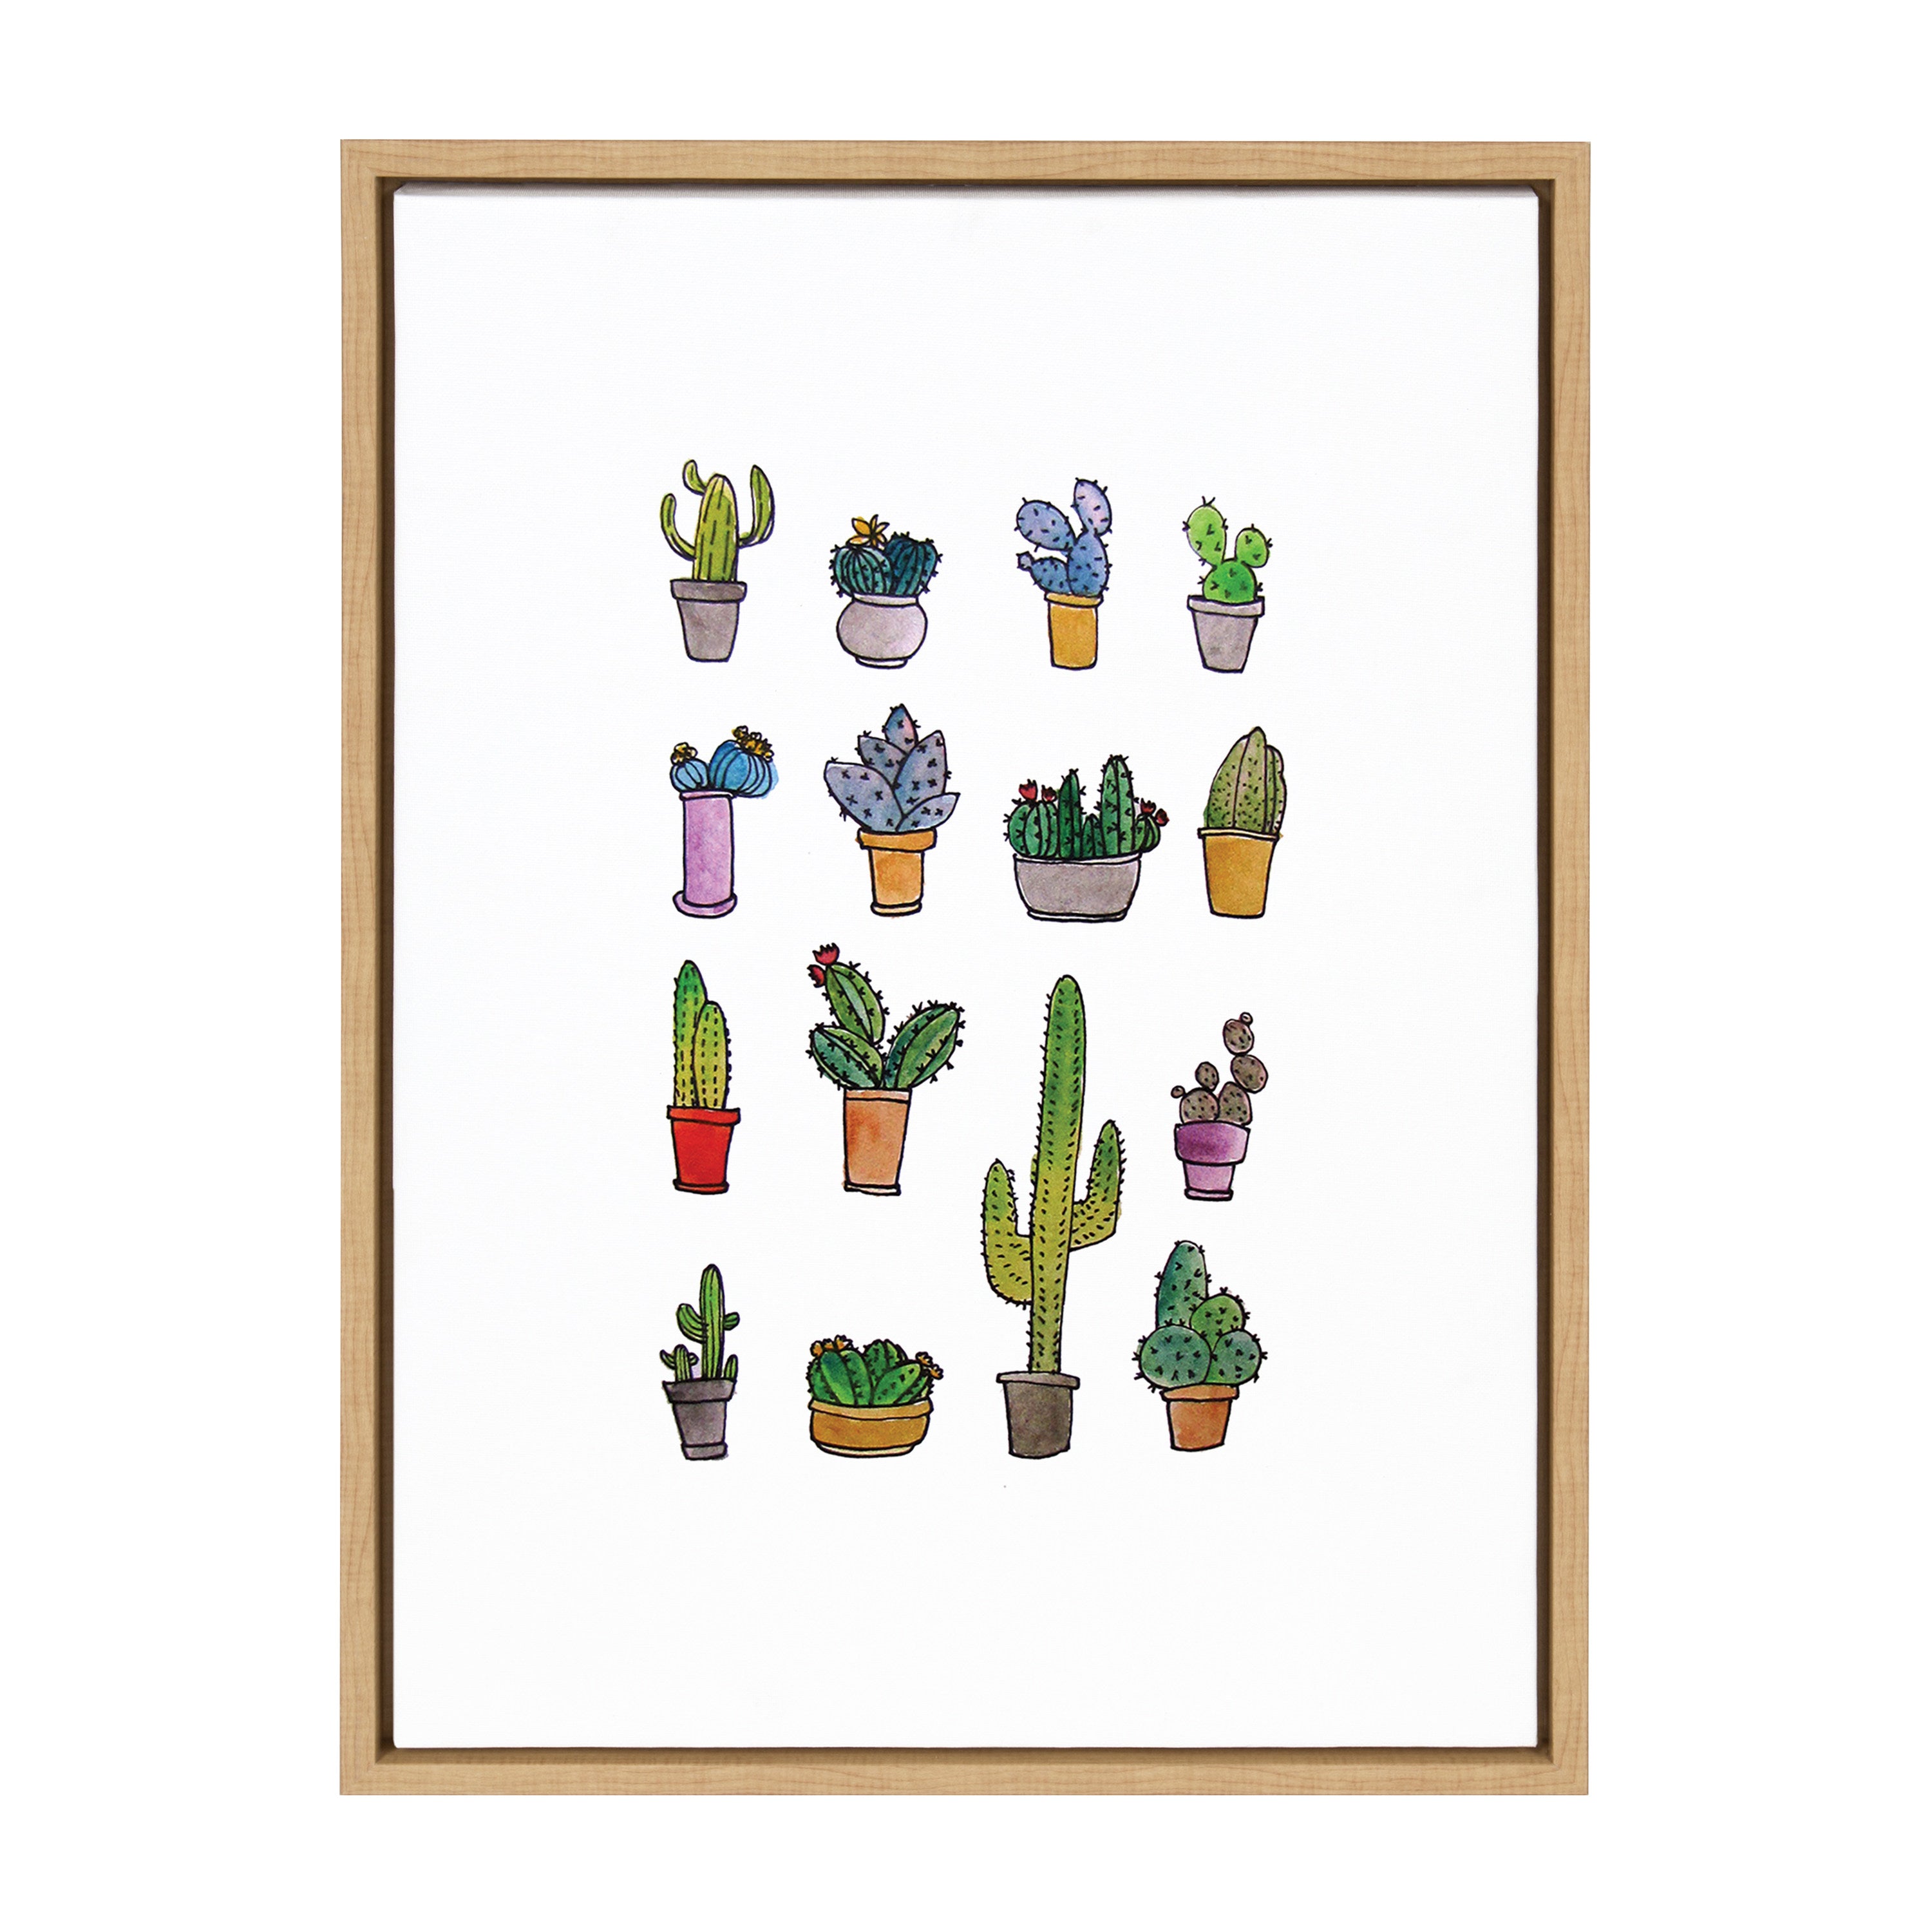 Sylvie Group of Cacti Framed Canvas by Viola Kreczmer